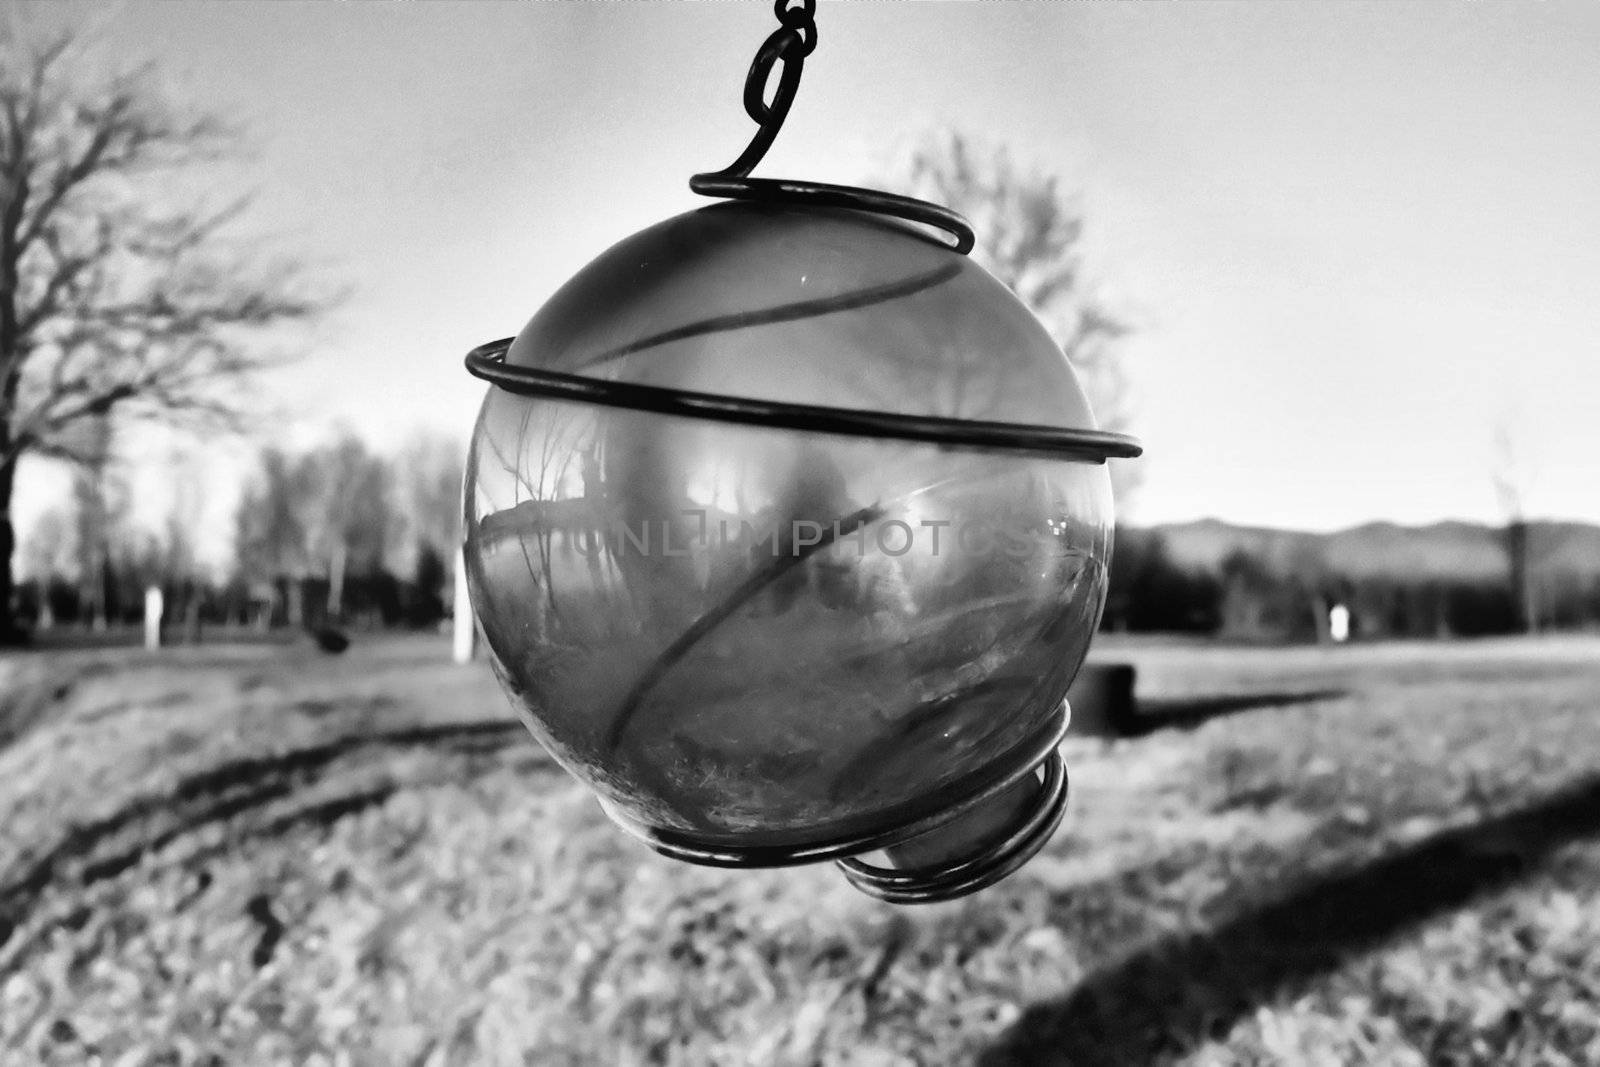 Hanging balll by northwoodsphoto